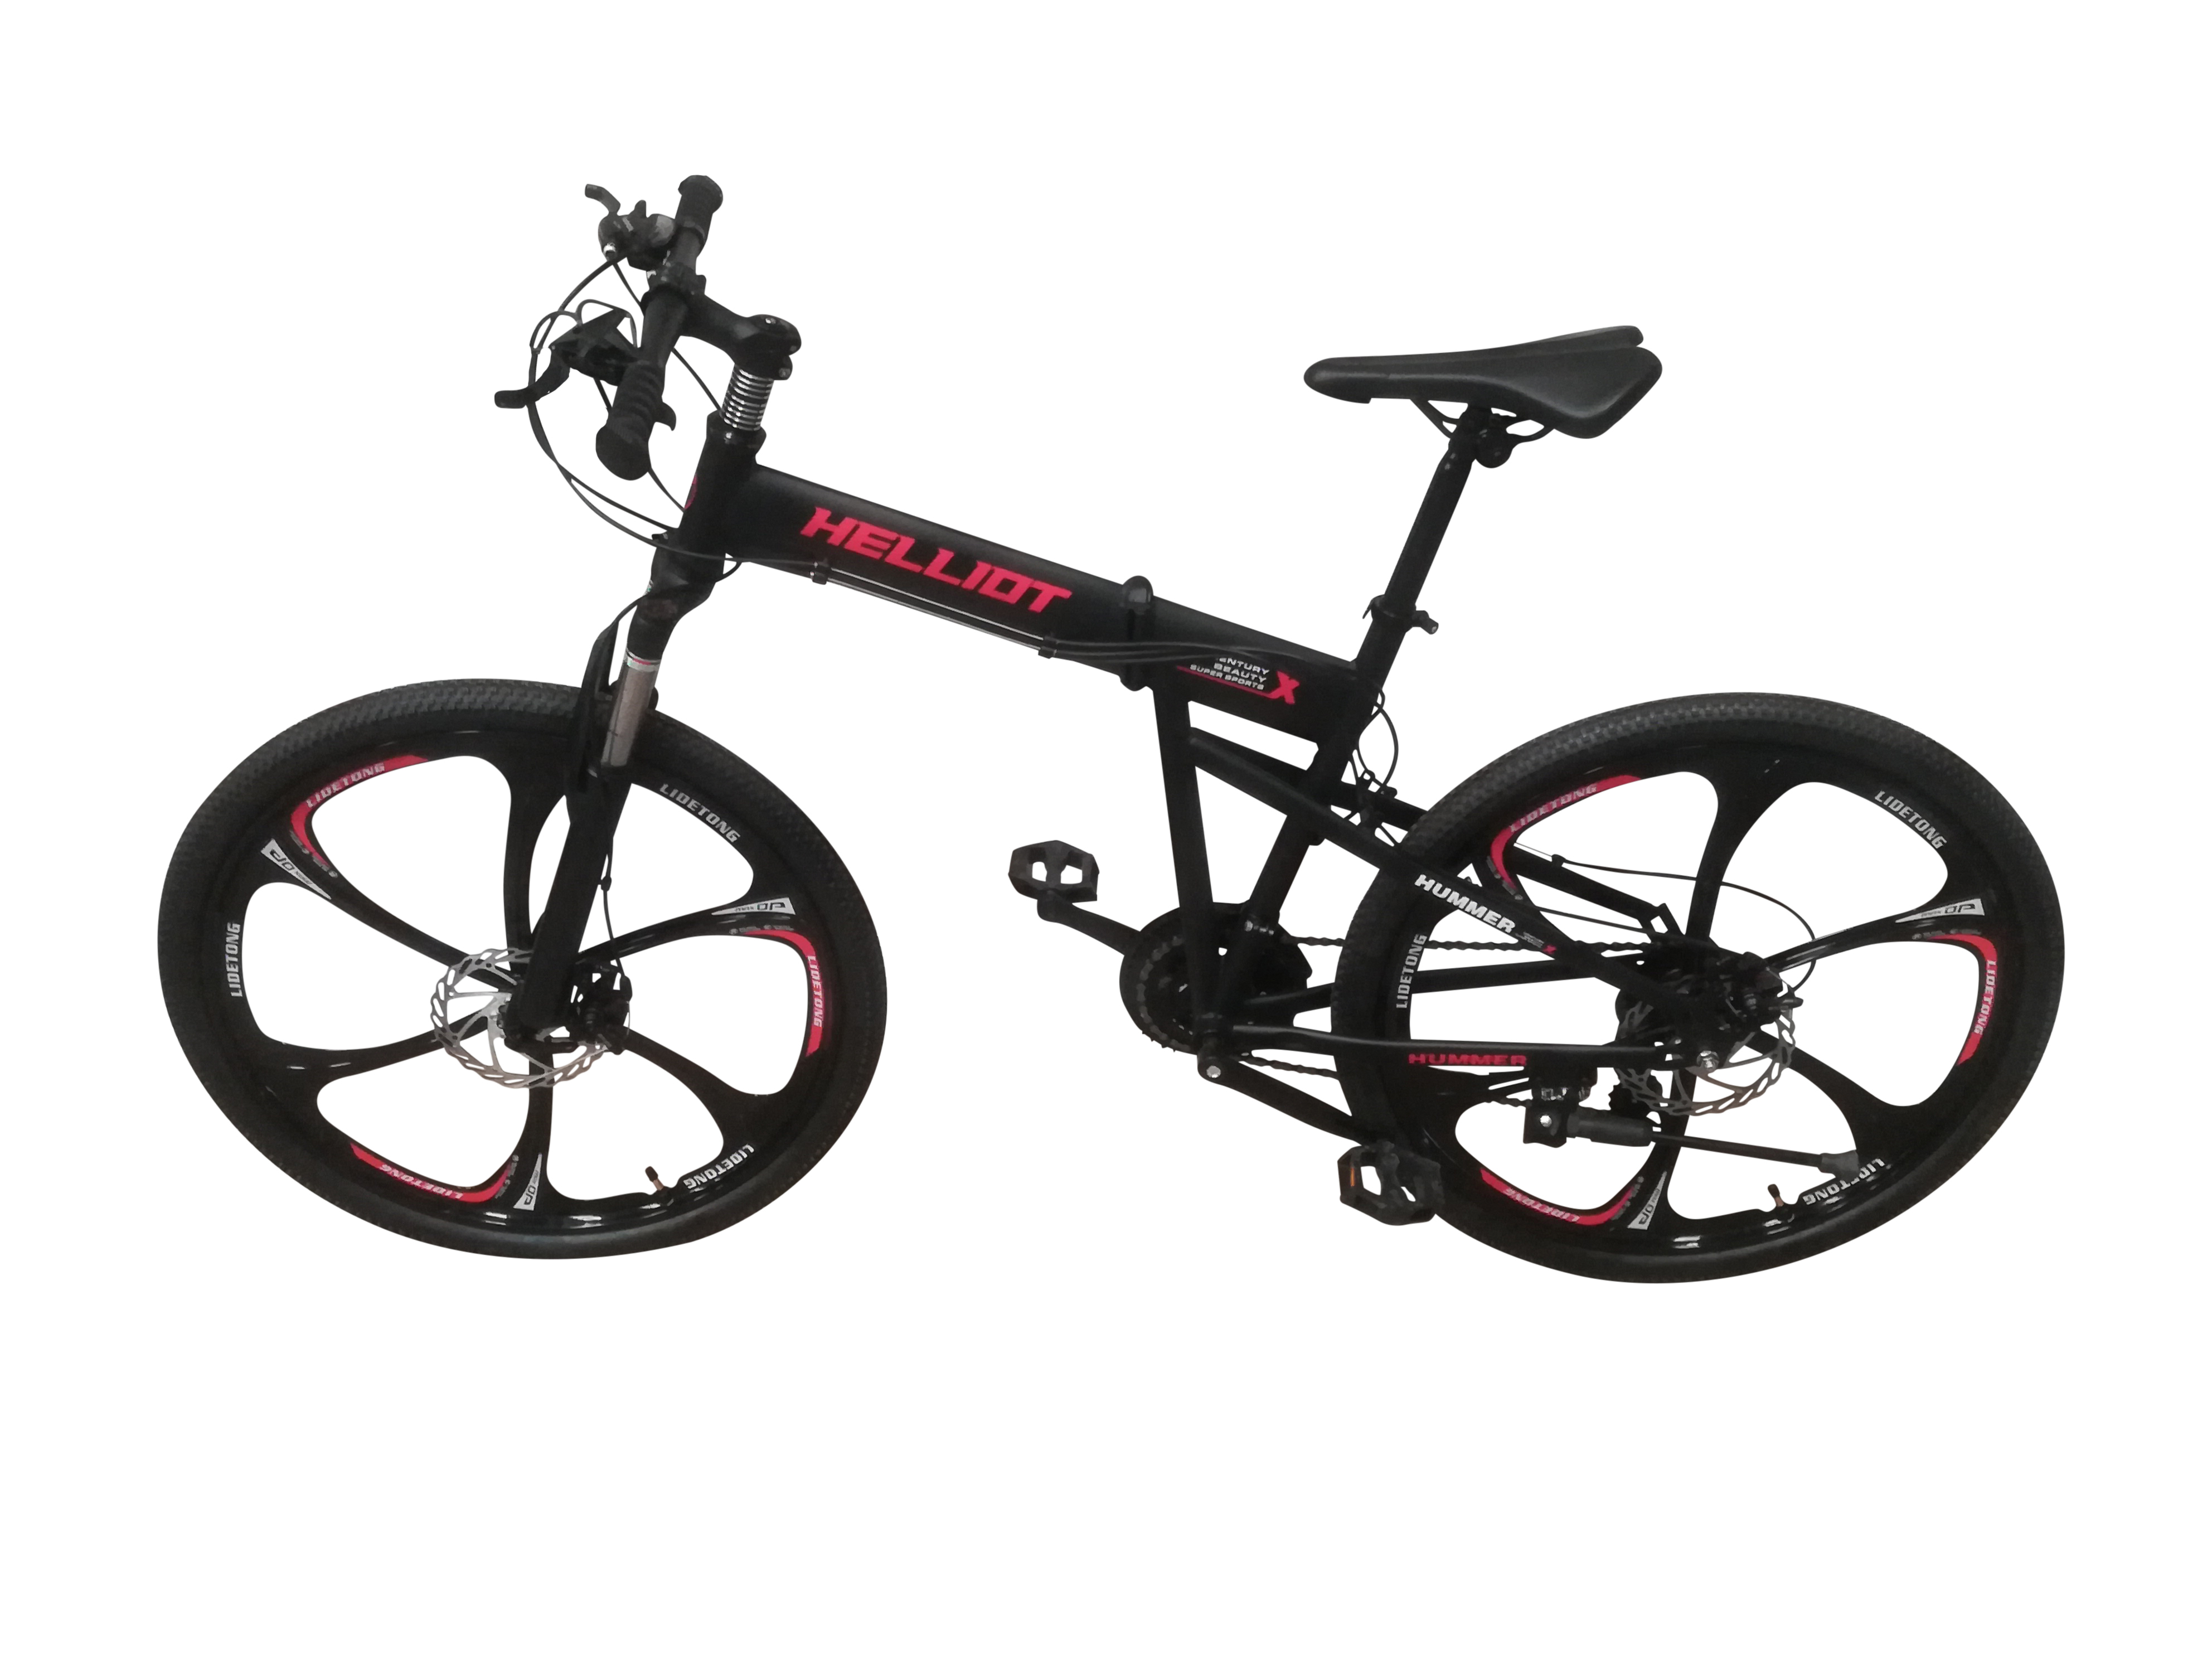 Huidige versus Valkuilen Helliot Bikes - Helliot Hummer opvouwbare mountainbike (zwart)